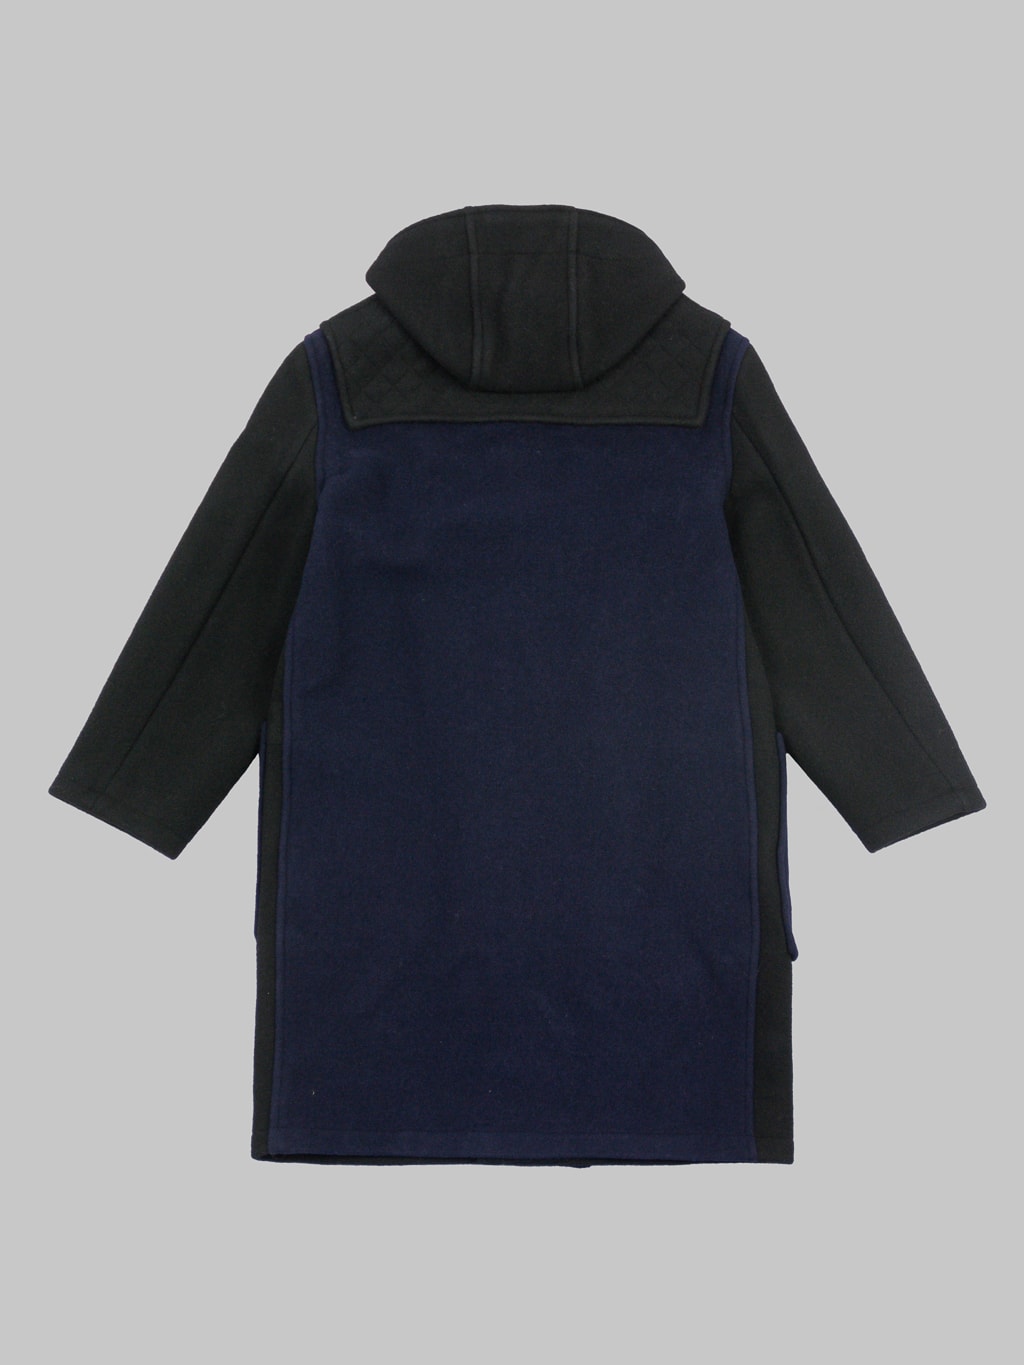 3sixteen x Gloverall Monty Duffle Coat black navy wool fabric back